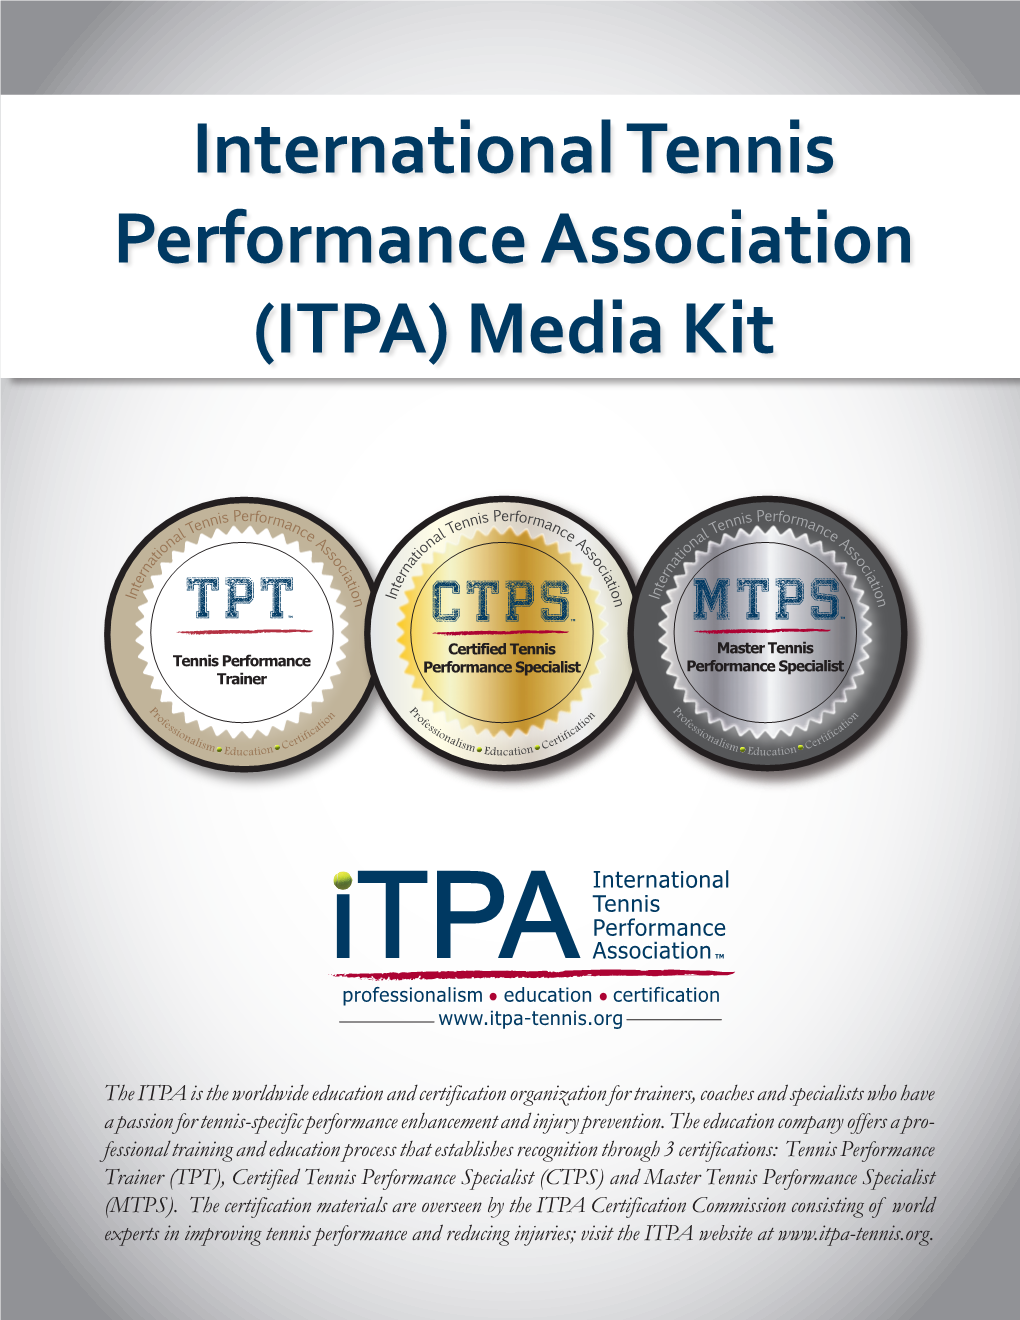 International Tennis Performance Association (ITPA) Media